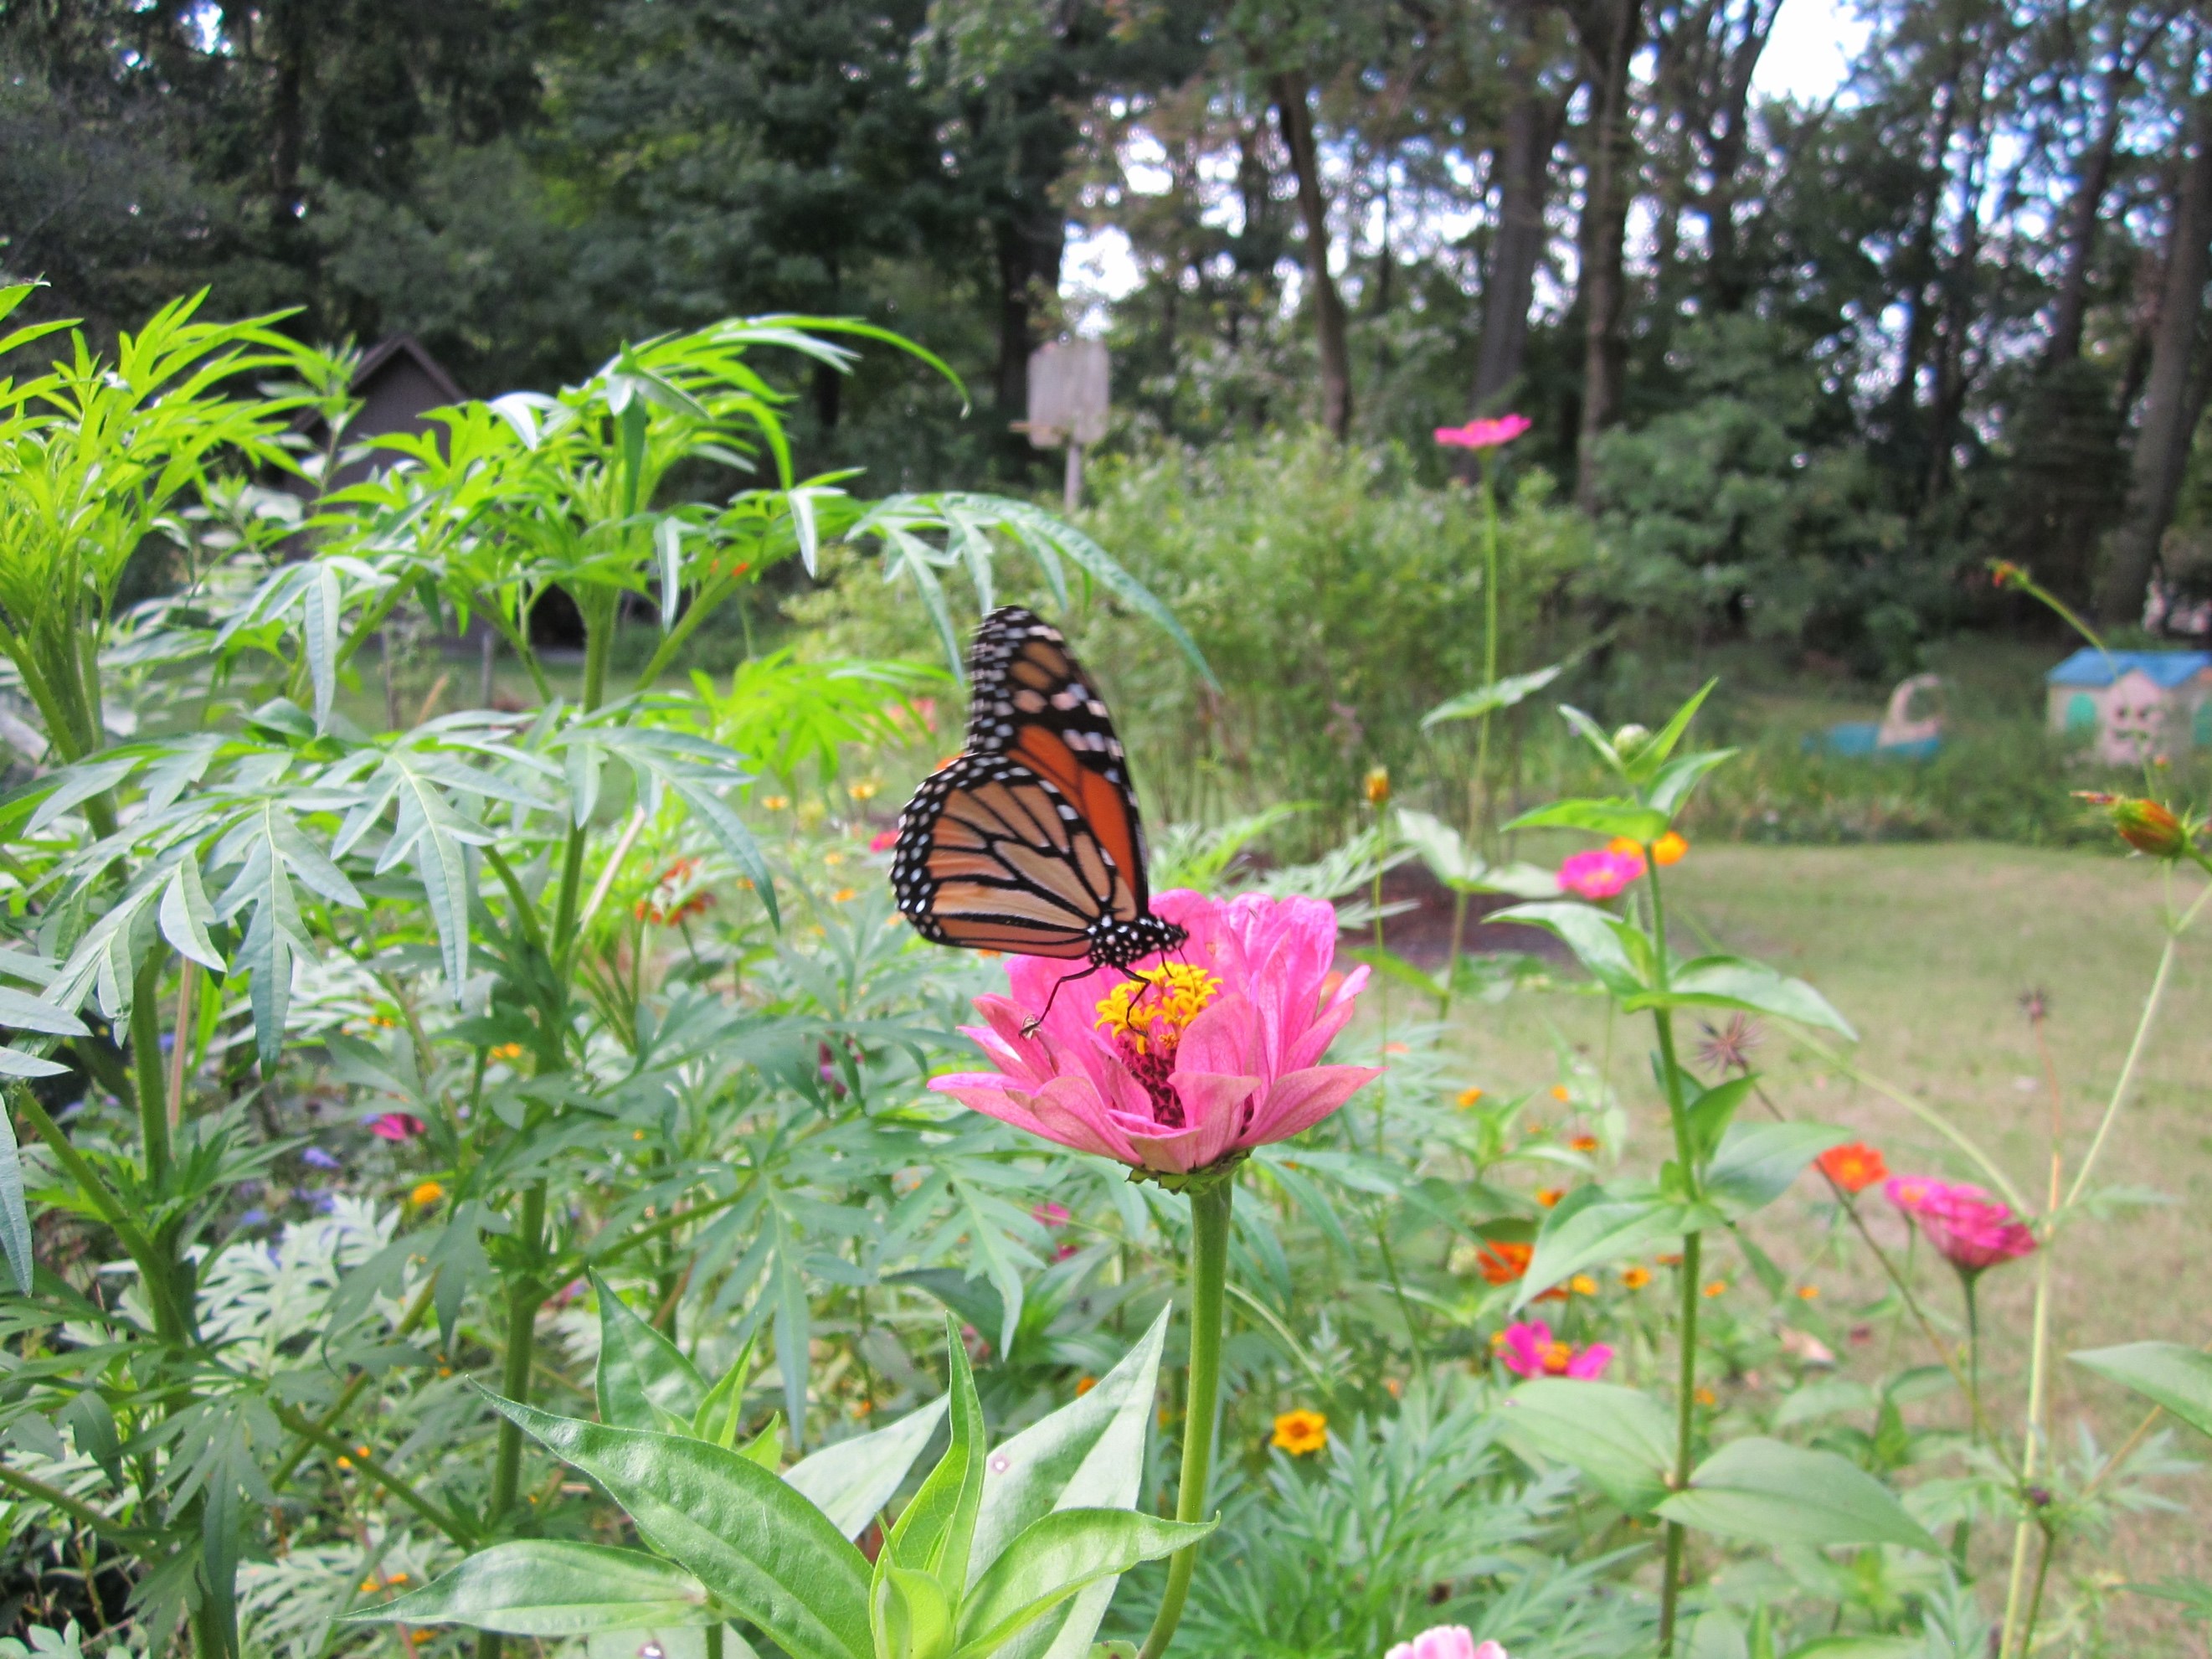 Monarch butterfly on a Zinnia